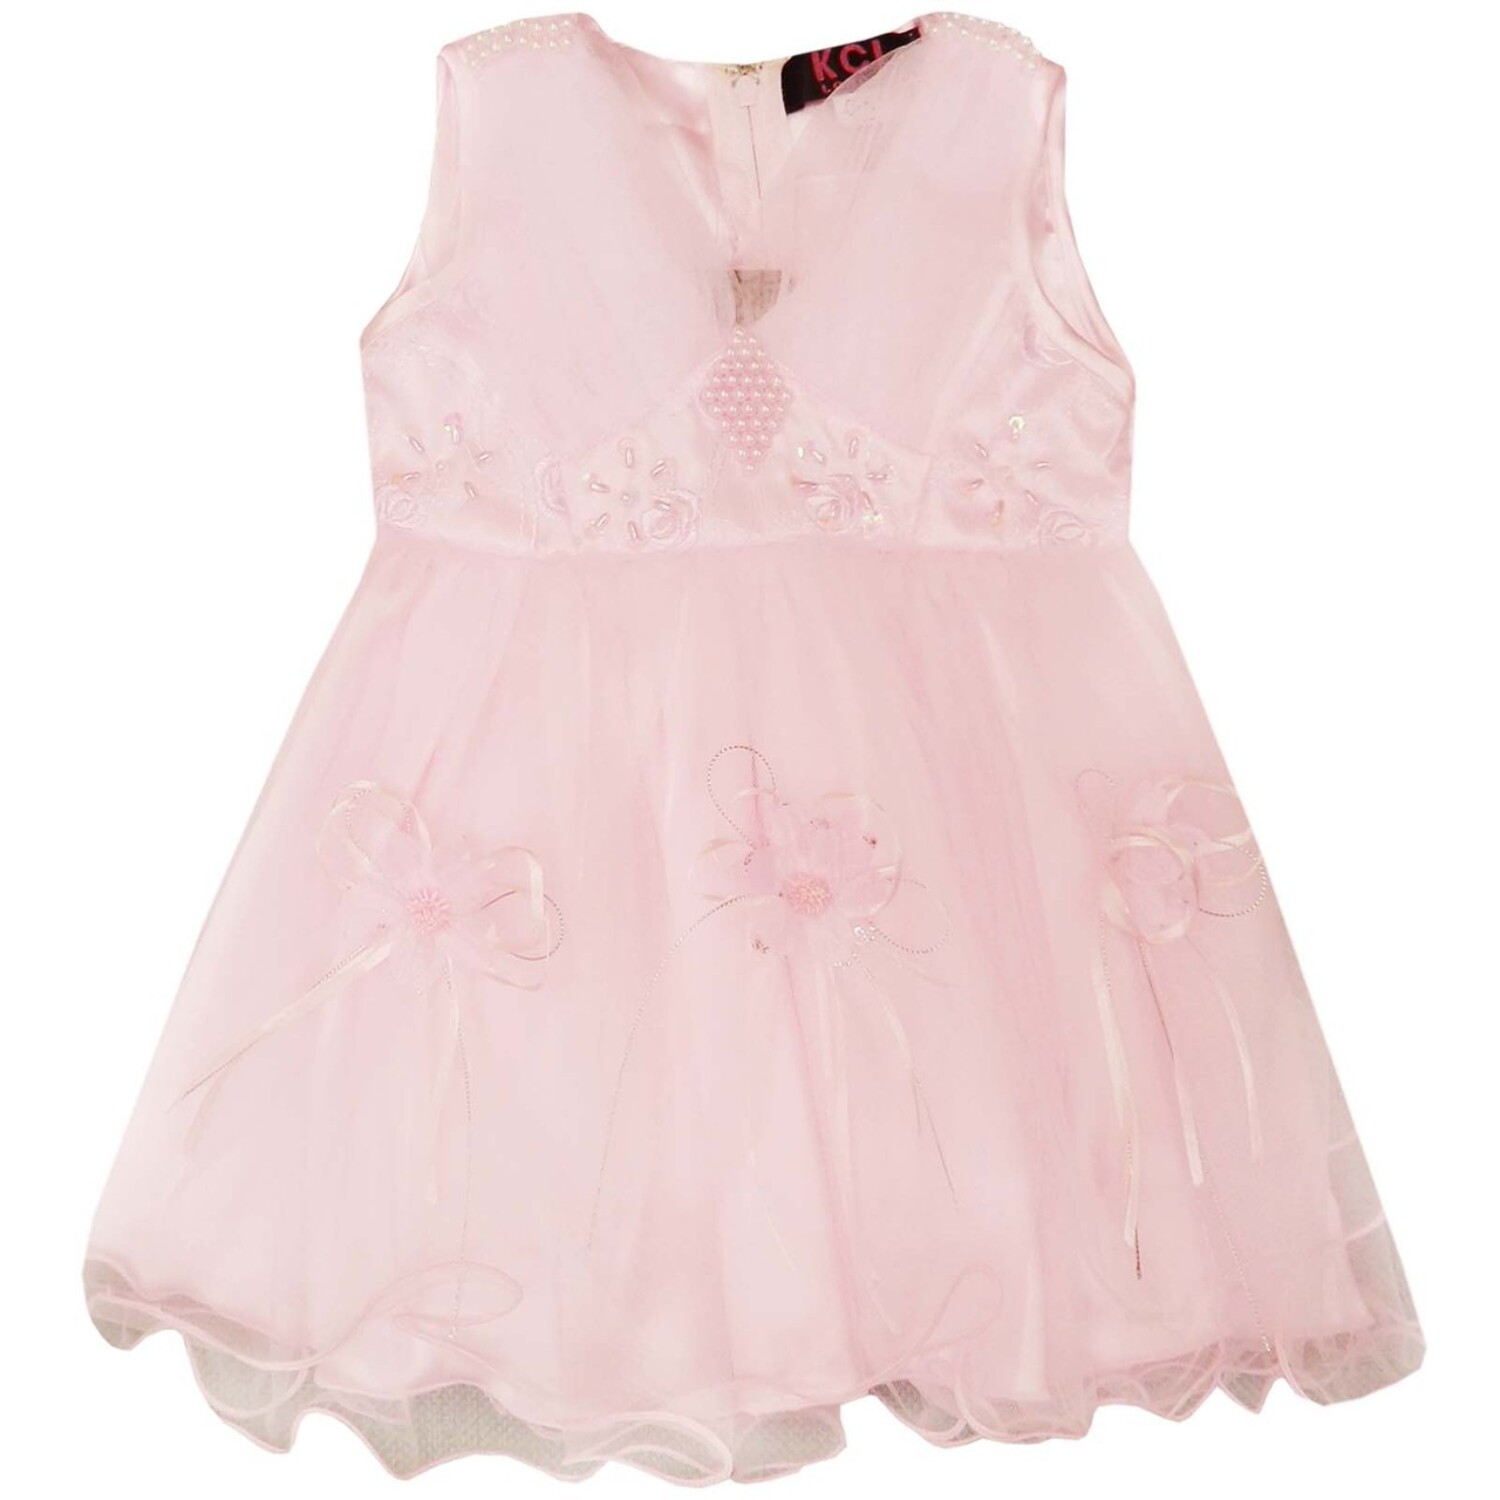 Kcl Diamond Bead Sheer Girls Occasion Dress Pink 0 24 Months : yellow ...